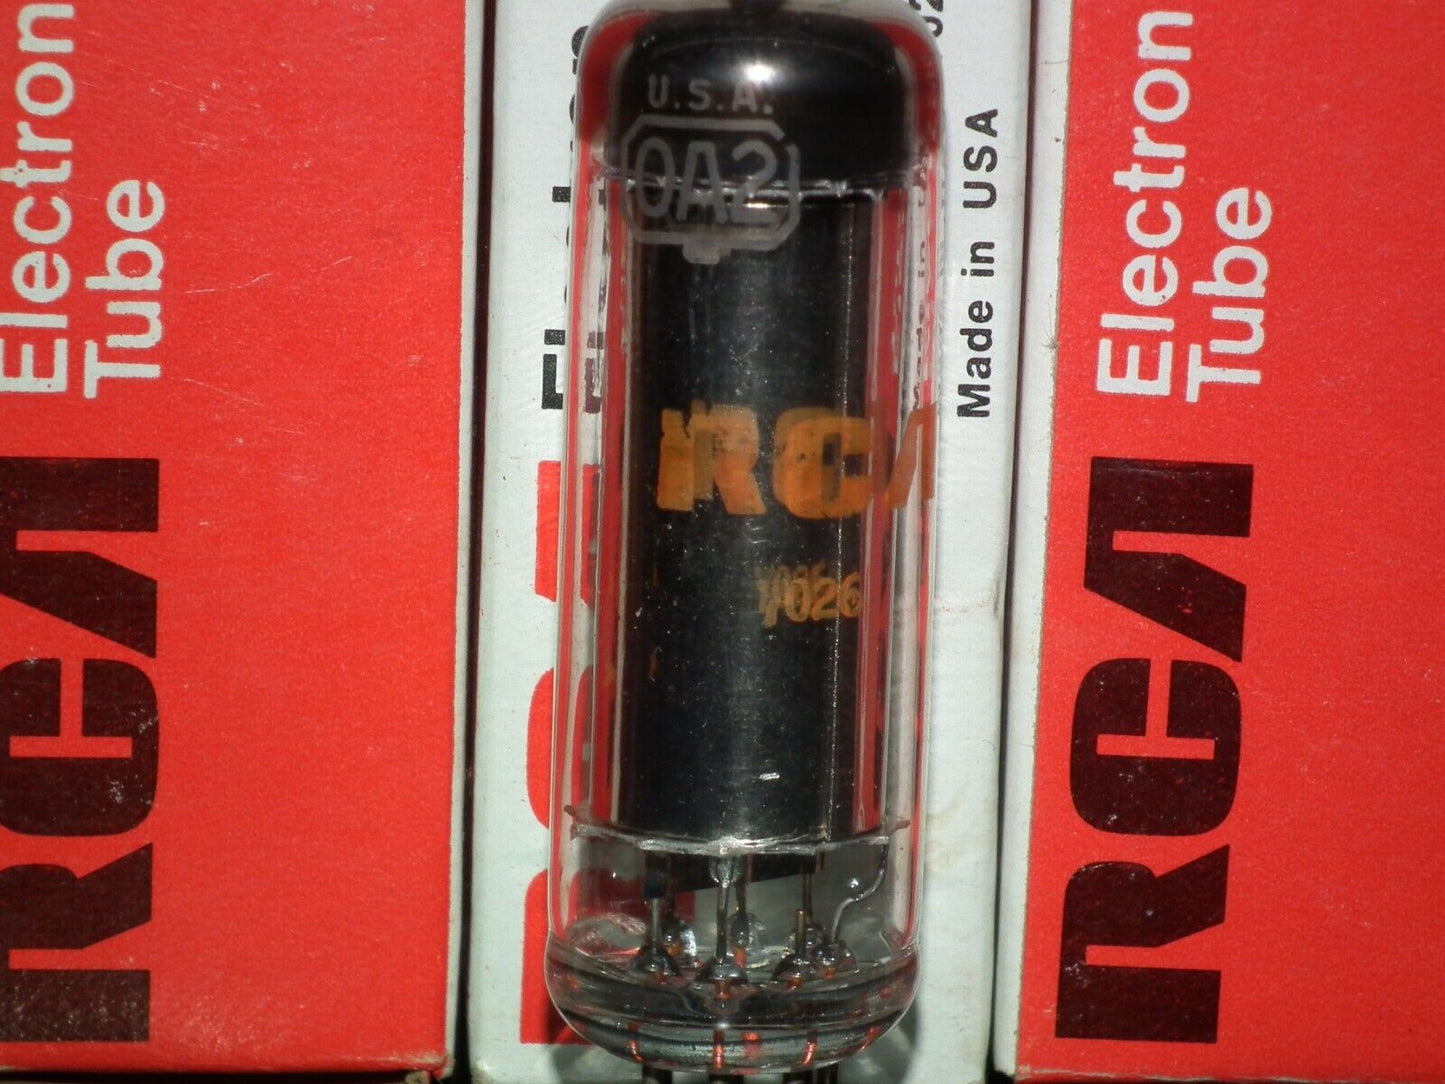 0A2 OA2 RCA 150C4 NOS NIB stablilisator tube STV150/30